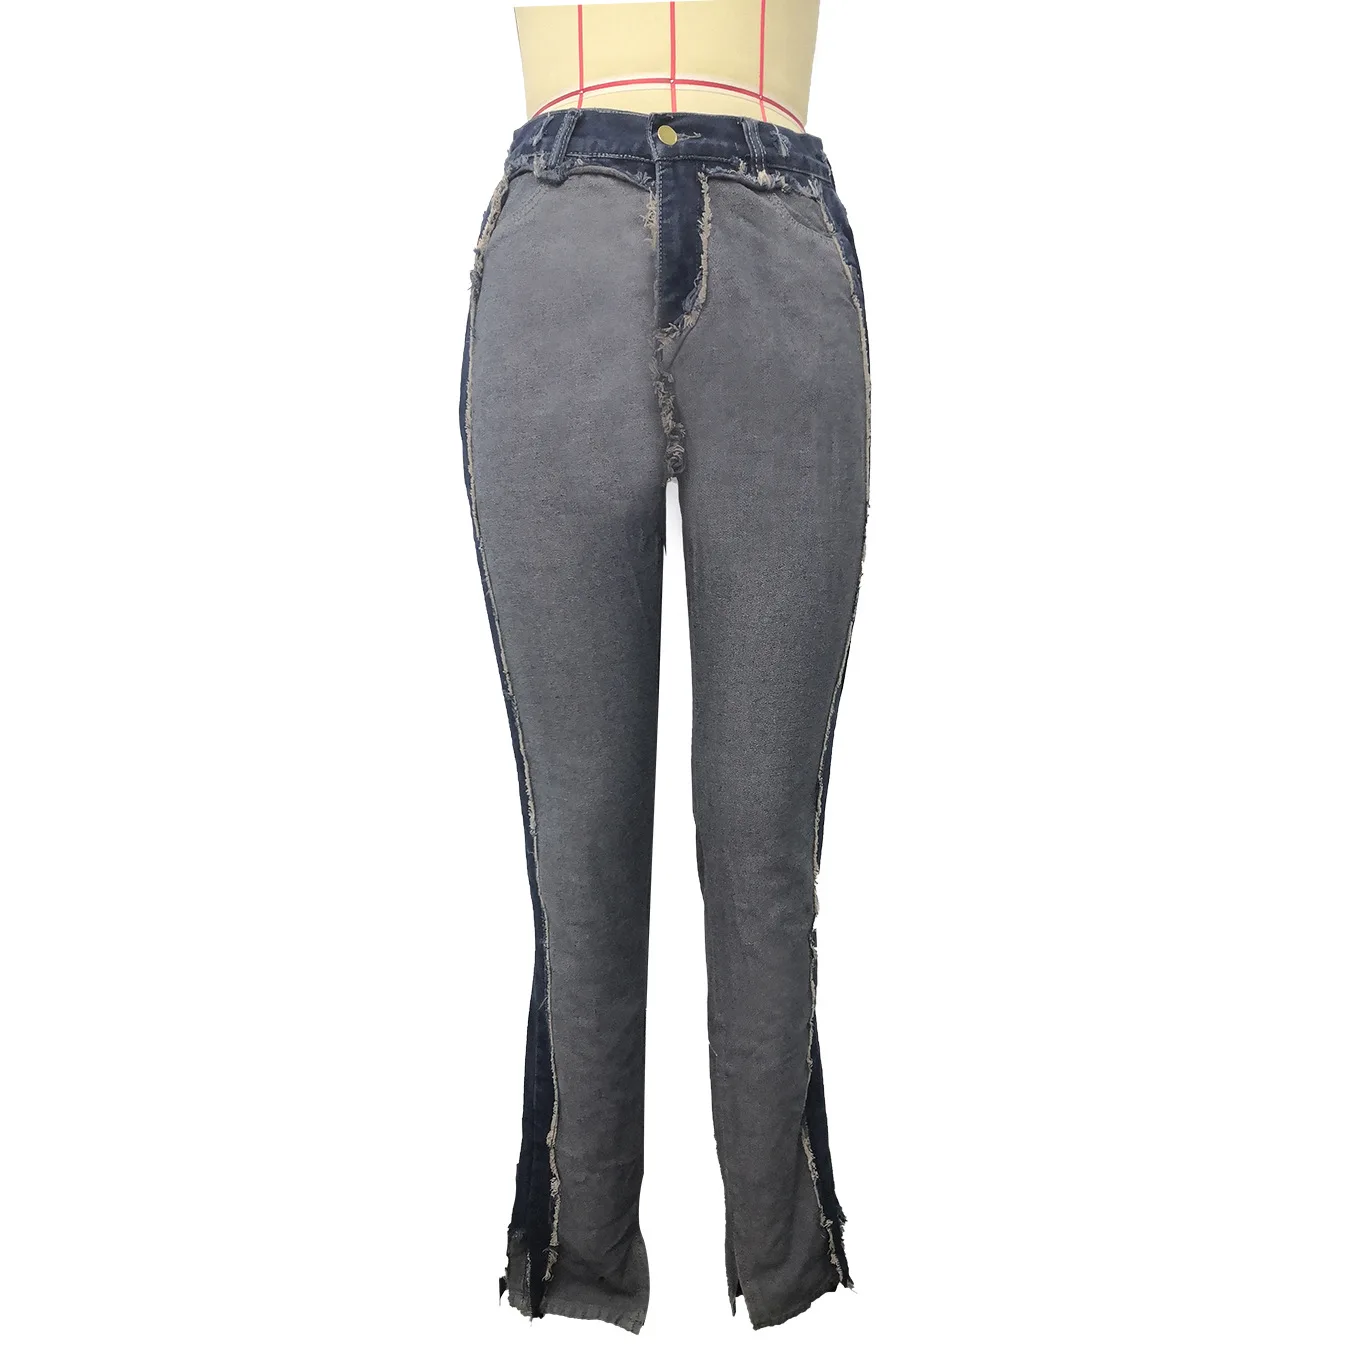 
GQ1166 2021 new arrivals jeans for women tassel pencil pants high waist jeans women fashionable casual jeans 